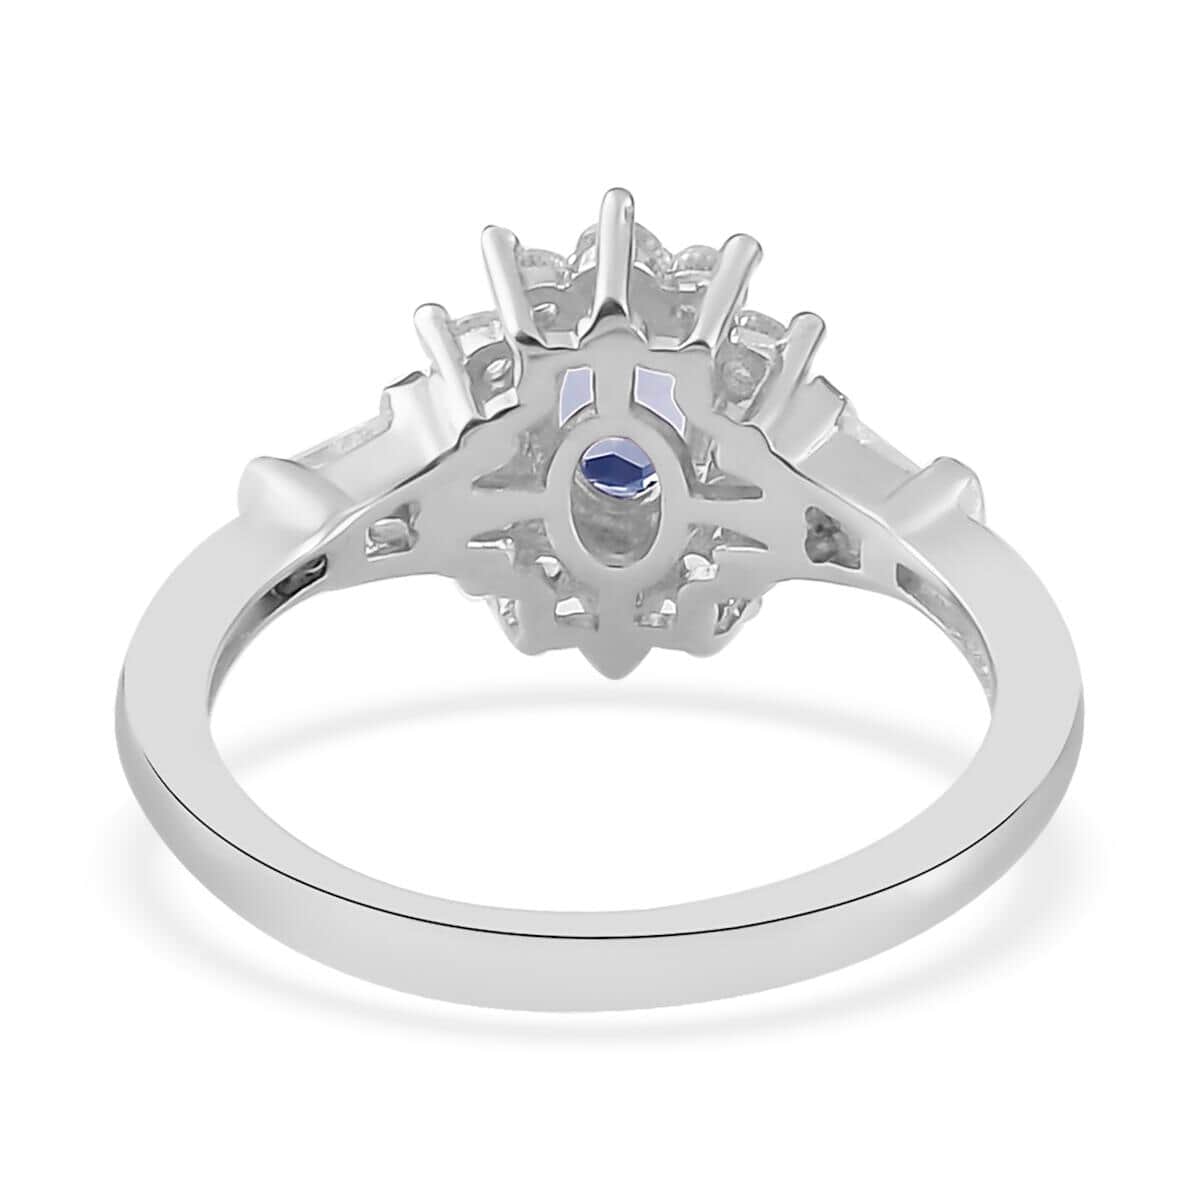 Blue Ceylon Sapphire, Natural White Zircon Sunburst Ring in Platinum Over Sterling Silver (Size 10.0) 1.15 ctw image number 4